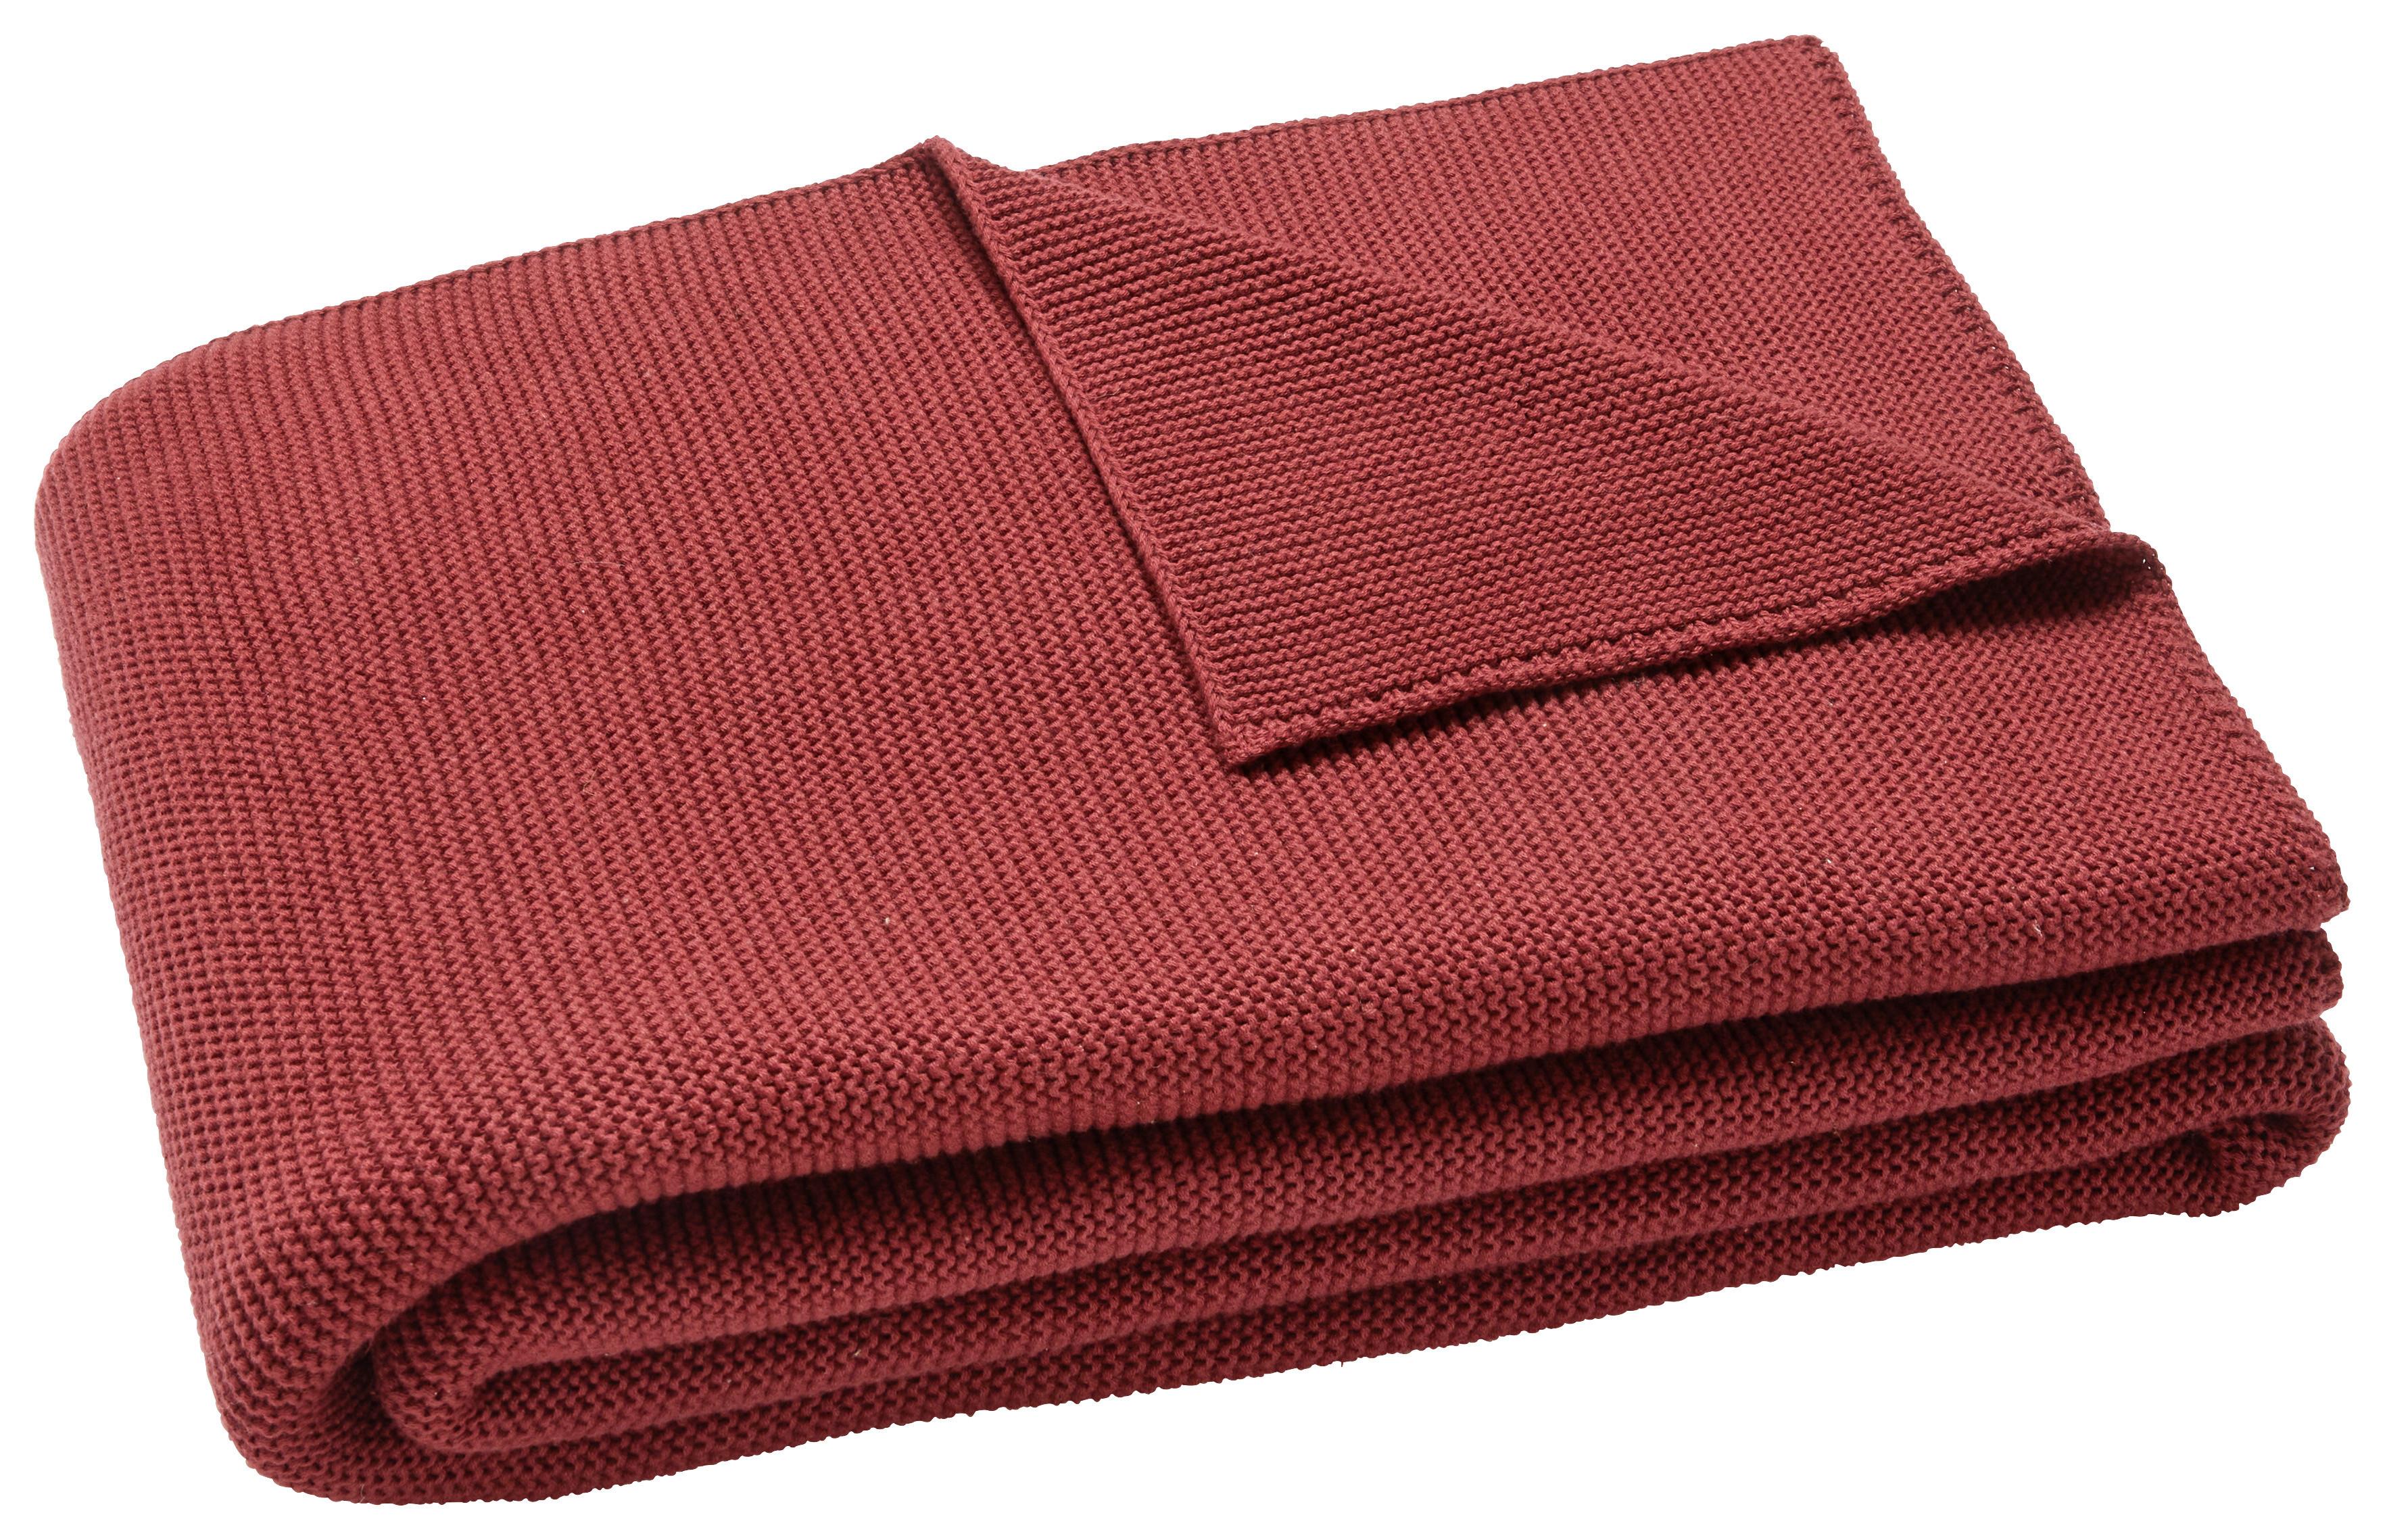 Deka Ines, 130/170cm - vínově červená, Moderní, textil (130/170cm) - Premium Living